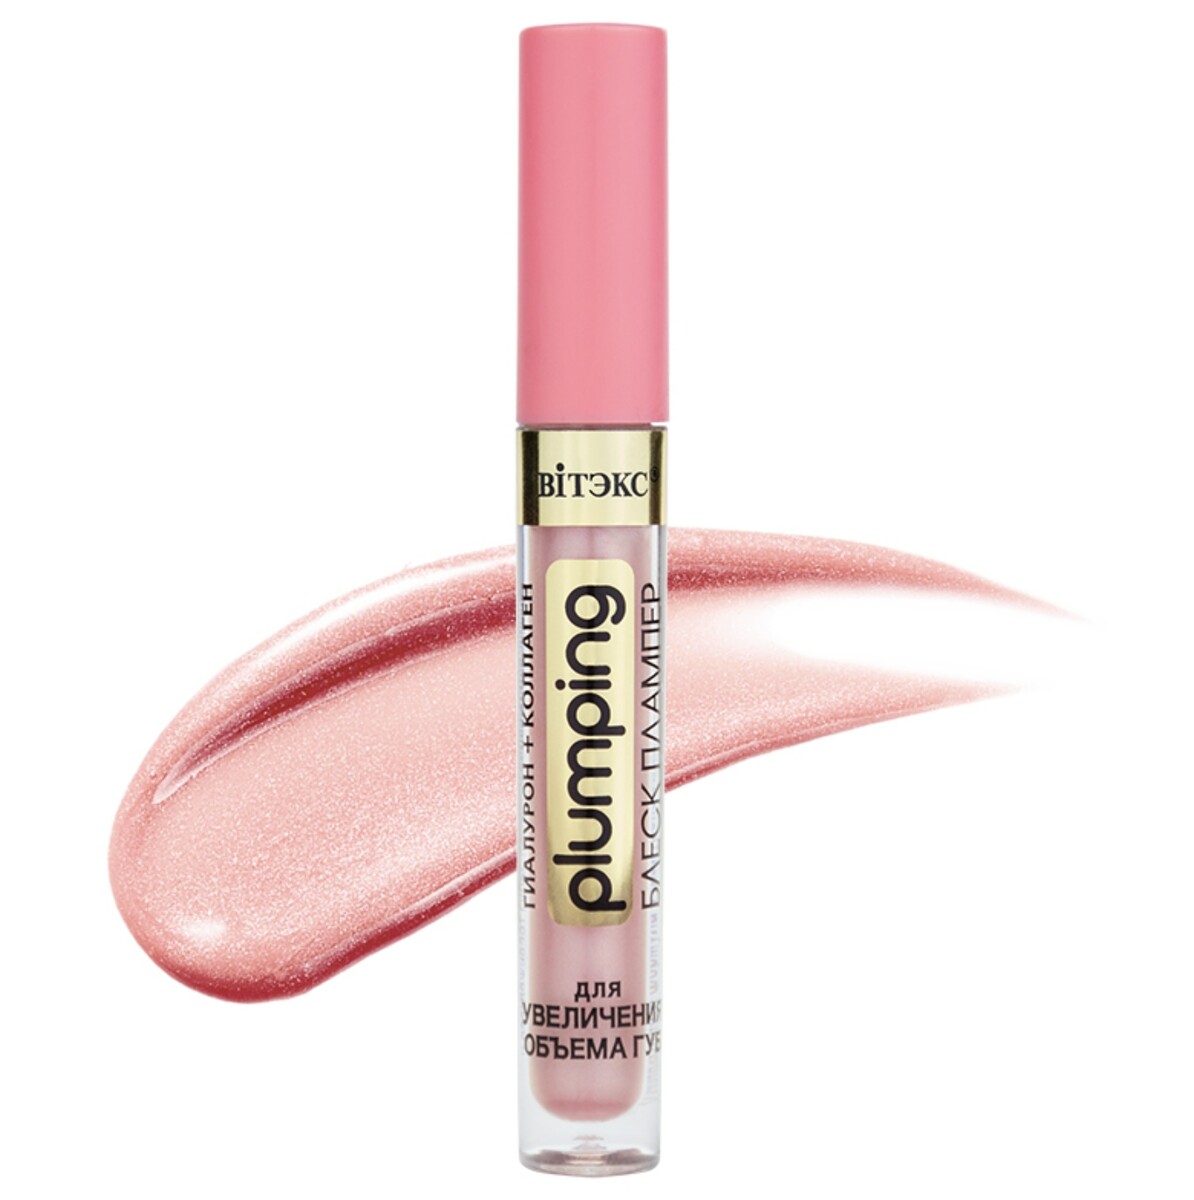 Vitex блеск-плампер для увеличения объема губ т.103 розовый кварц plumping 3мл relouis плампер для губ cool addiction lip plumper 07 sensual plum